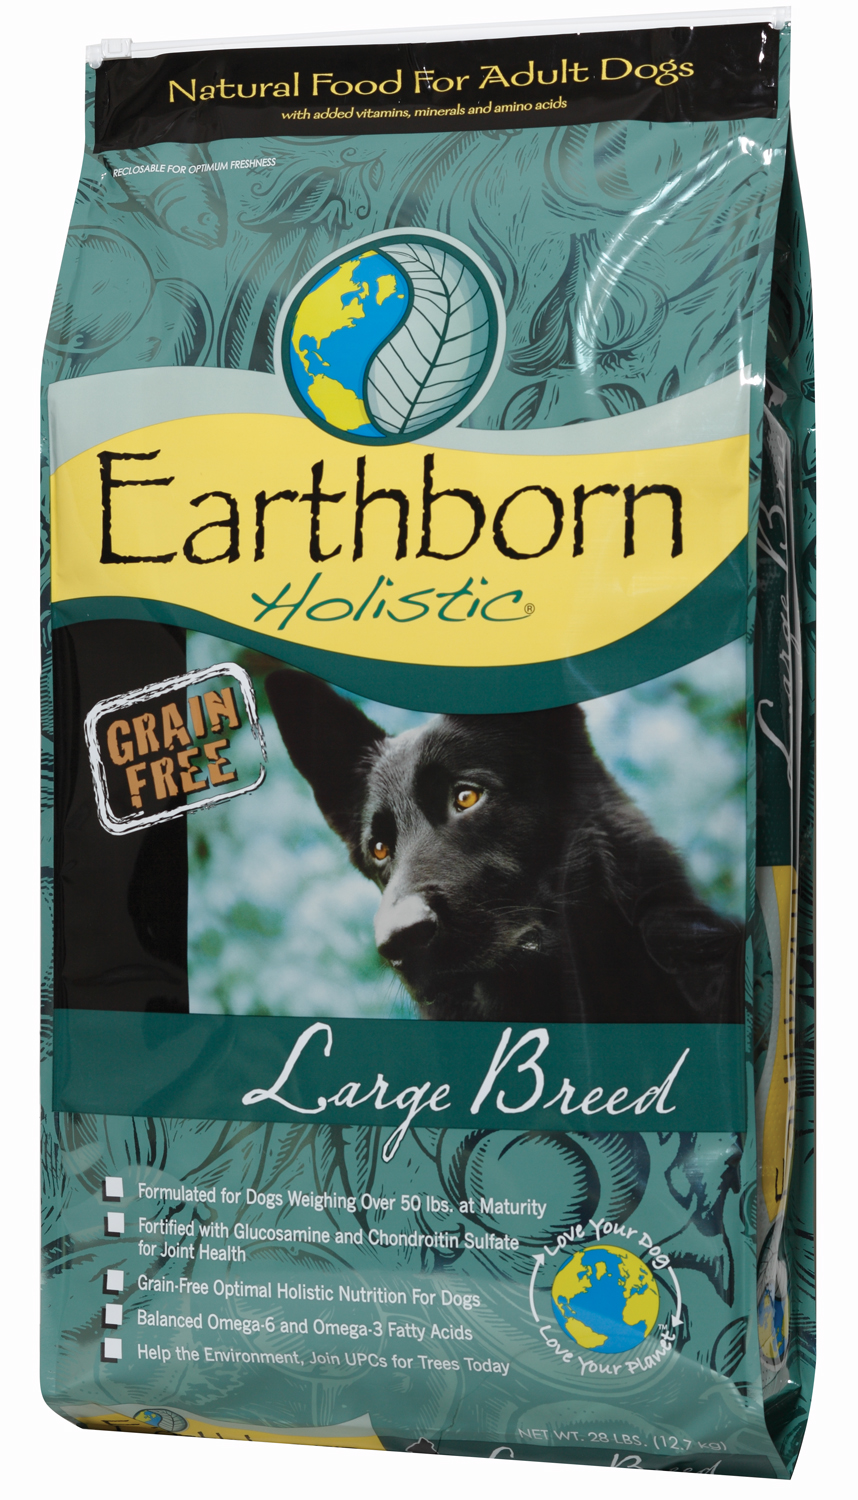 Earthborn Holistic Large Breed, 25 lbs